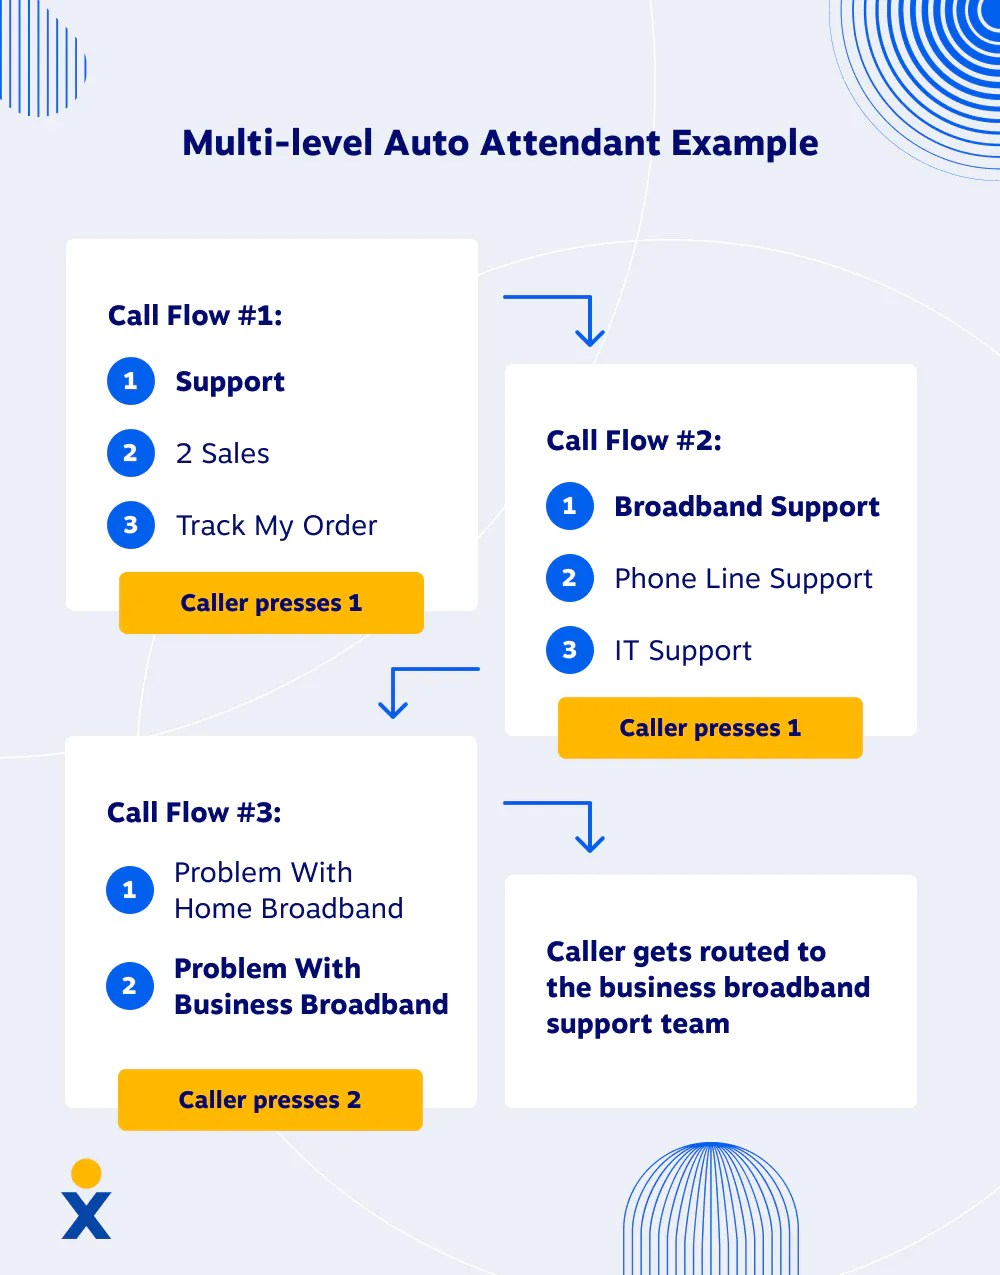 Multi-level Auto Attendant Call Flow Example